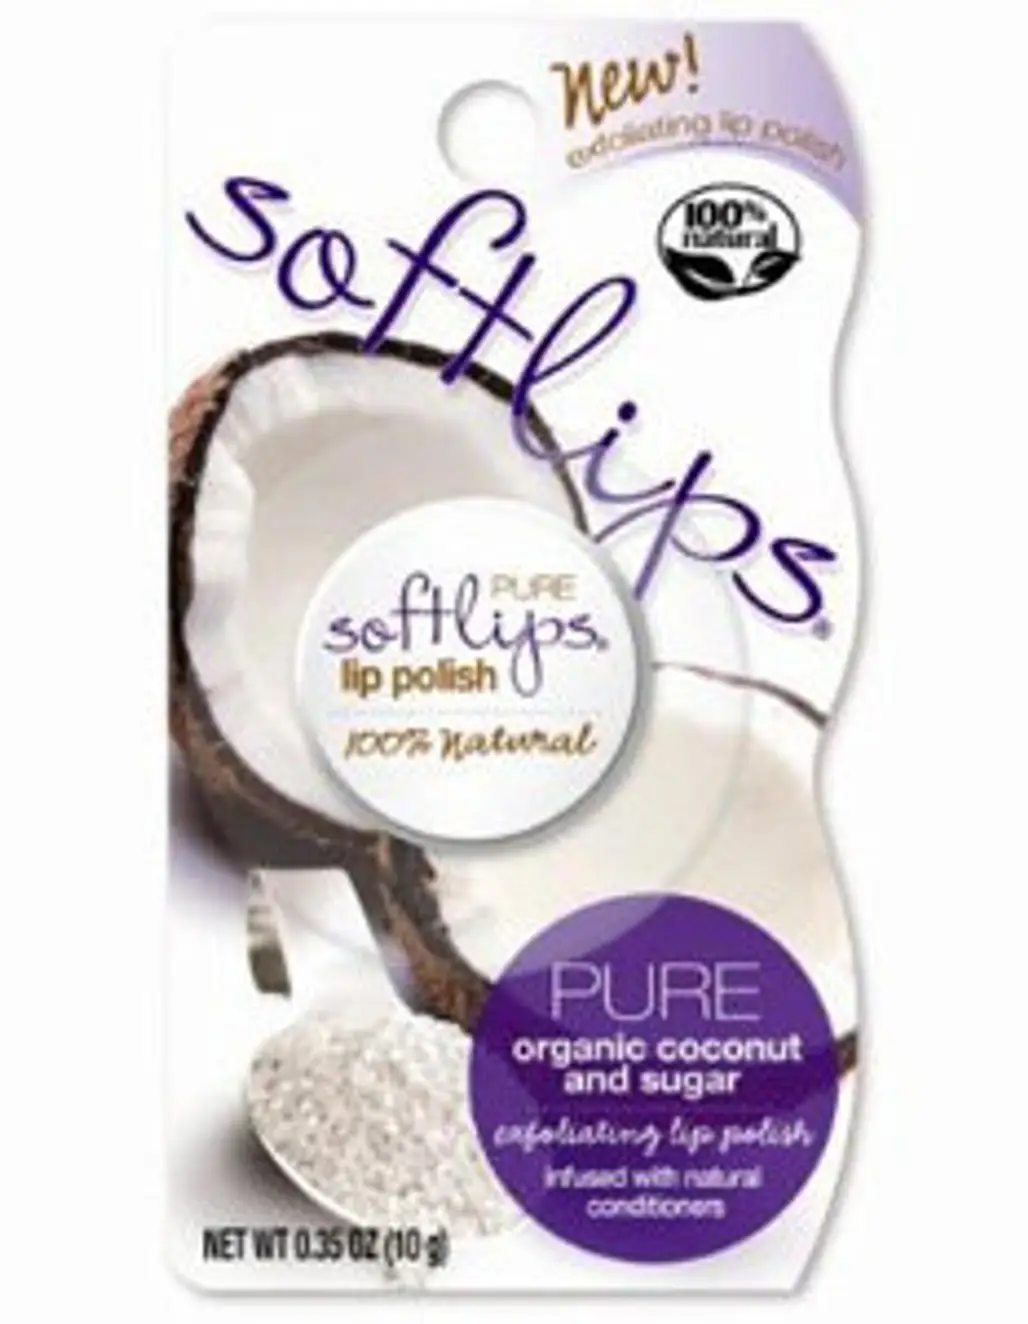 Softlips PURE Organic Coconut and Sugar Exfoliating Lip Polish